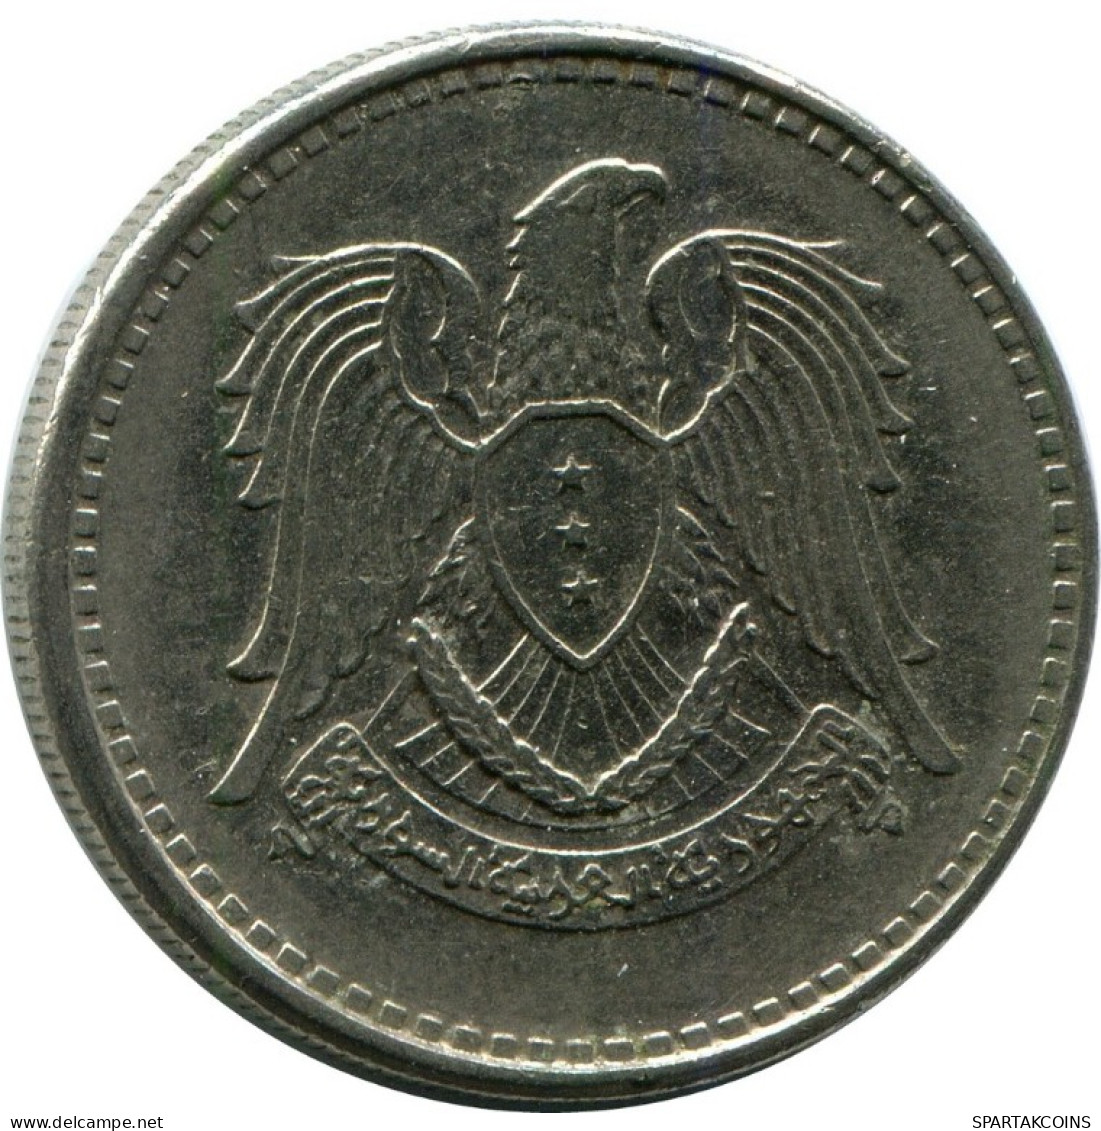 1 LIRA 1968 SYRIA Islamic Coin #AH973.U.A - Syria